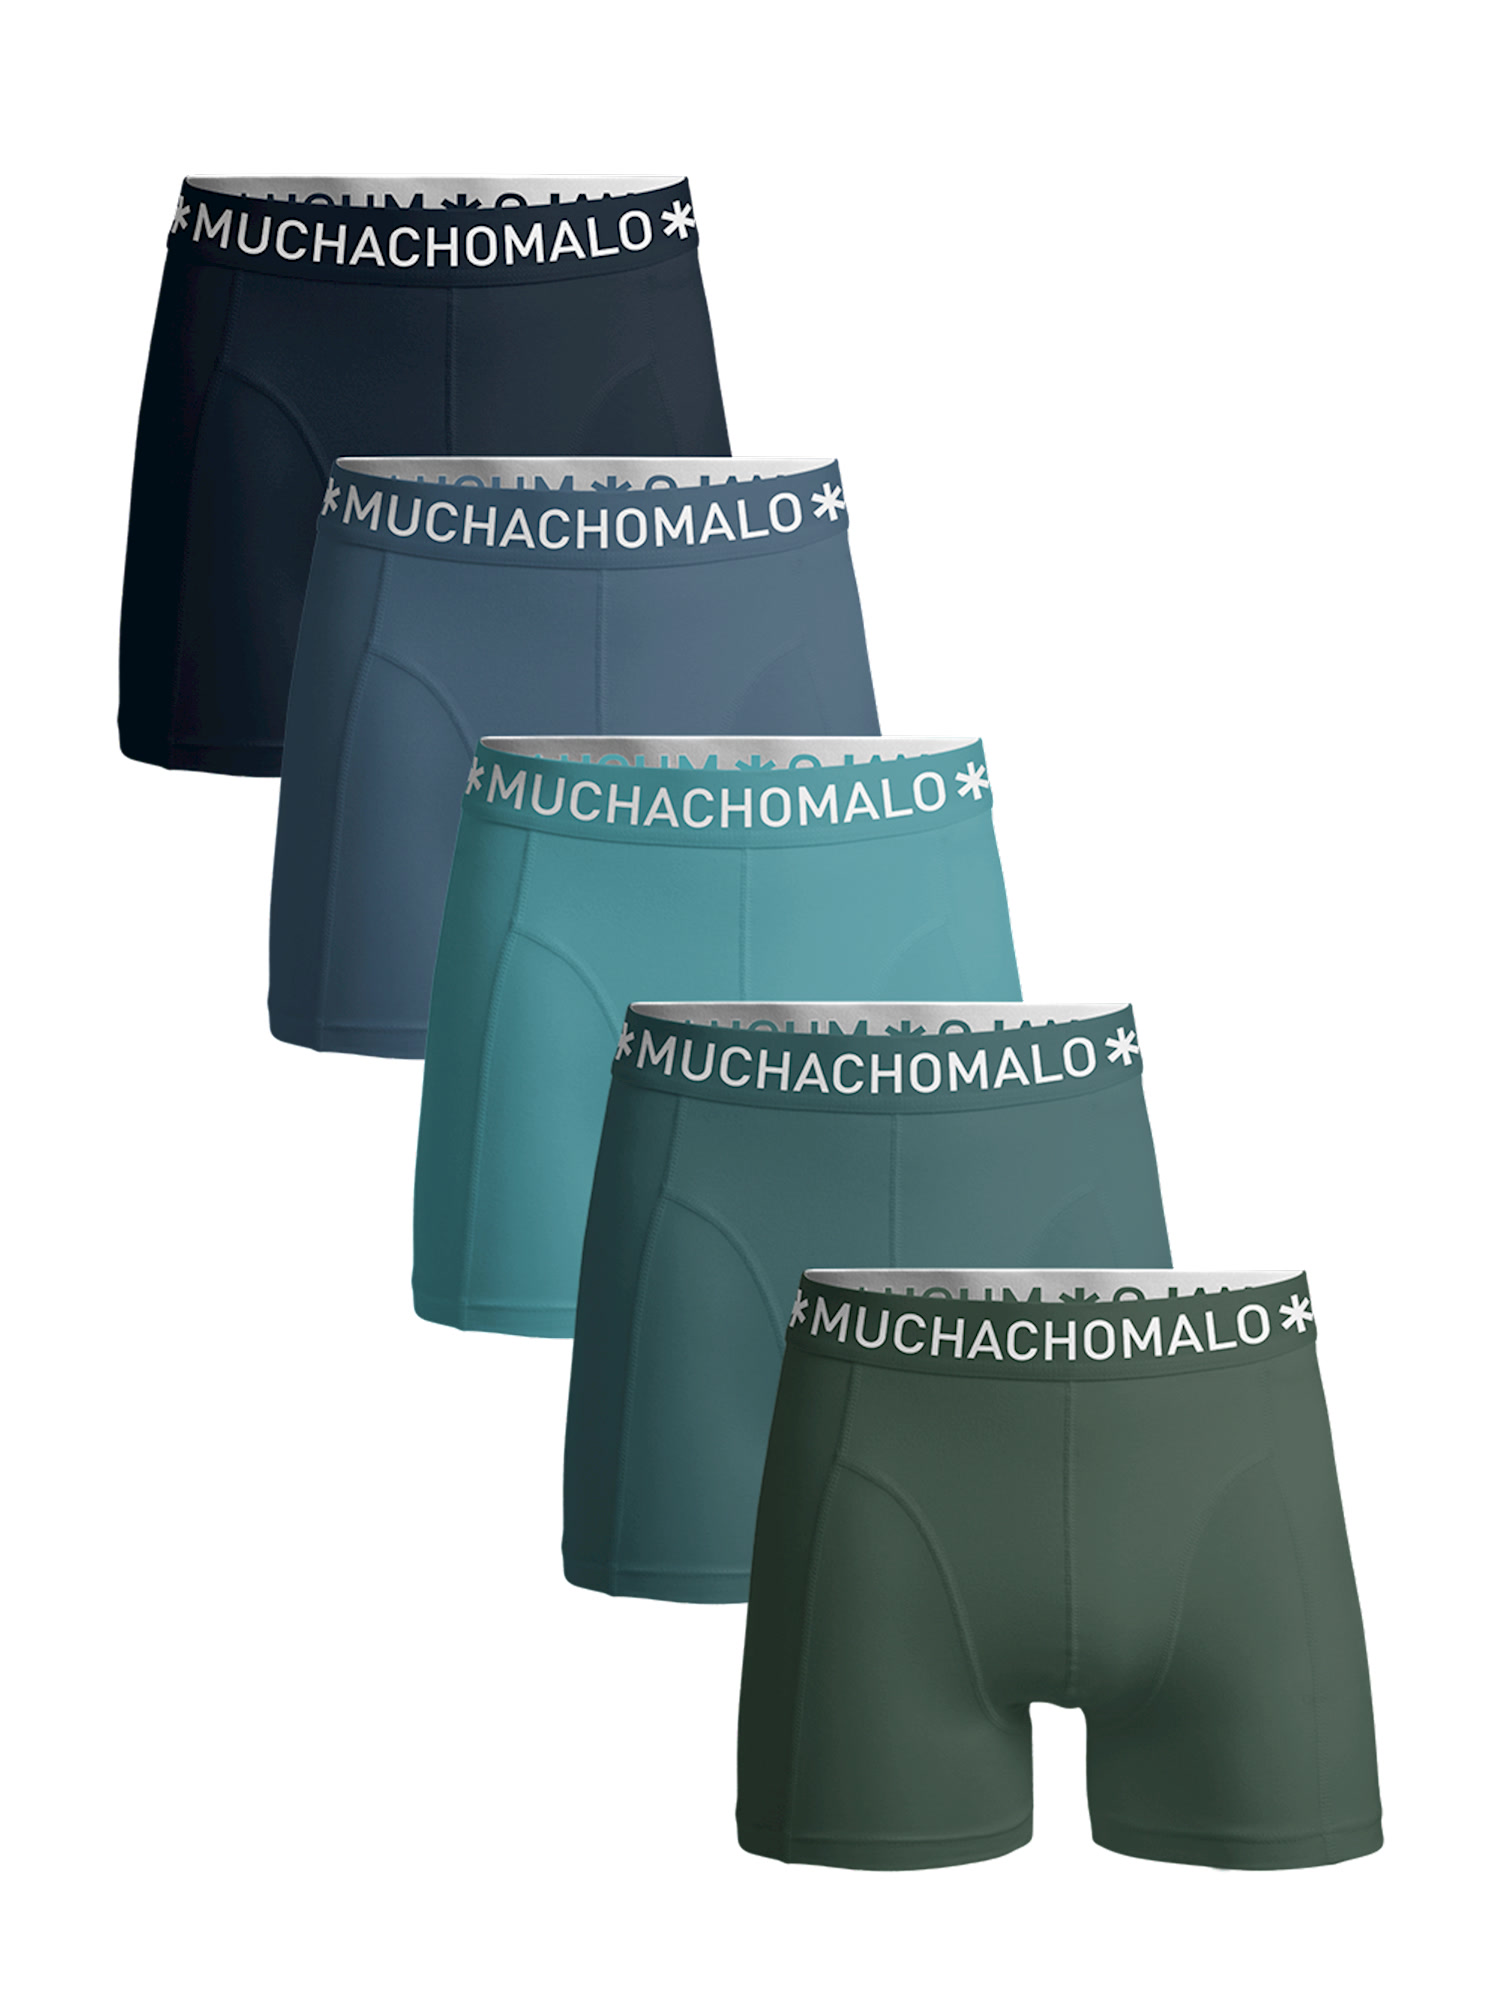 Боксеры Muchachomalo 5er-Set: Boxershorts, цвет Black/Blue/Blue/Green/Green боксеры muchachomalo 5er set boxershorts цвет black blue blue green pink